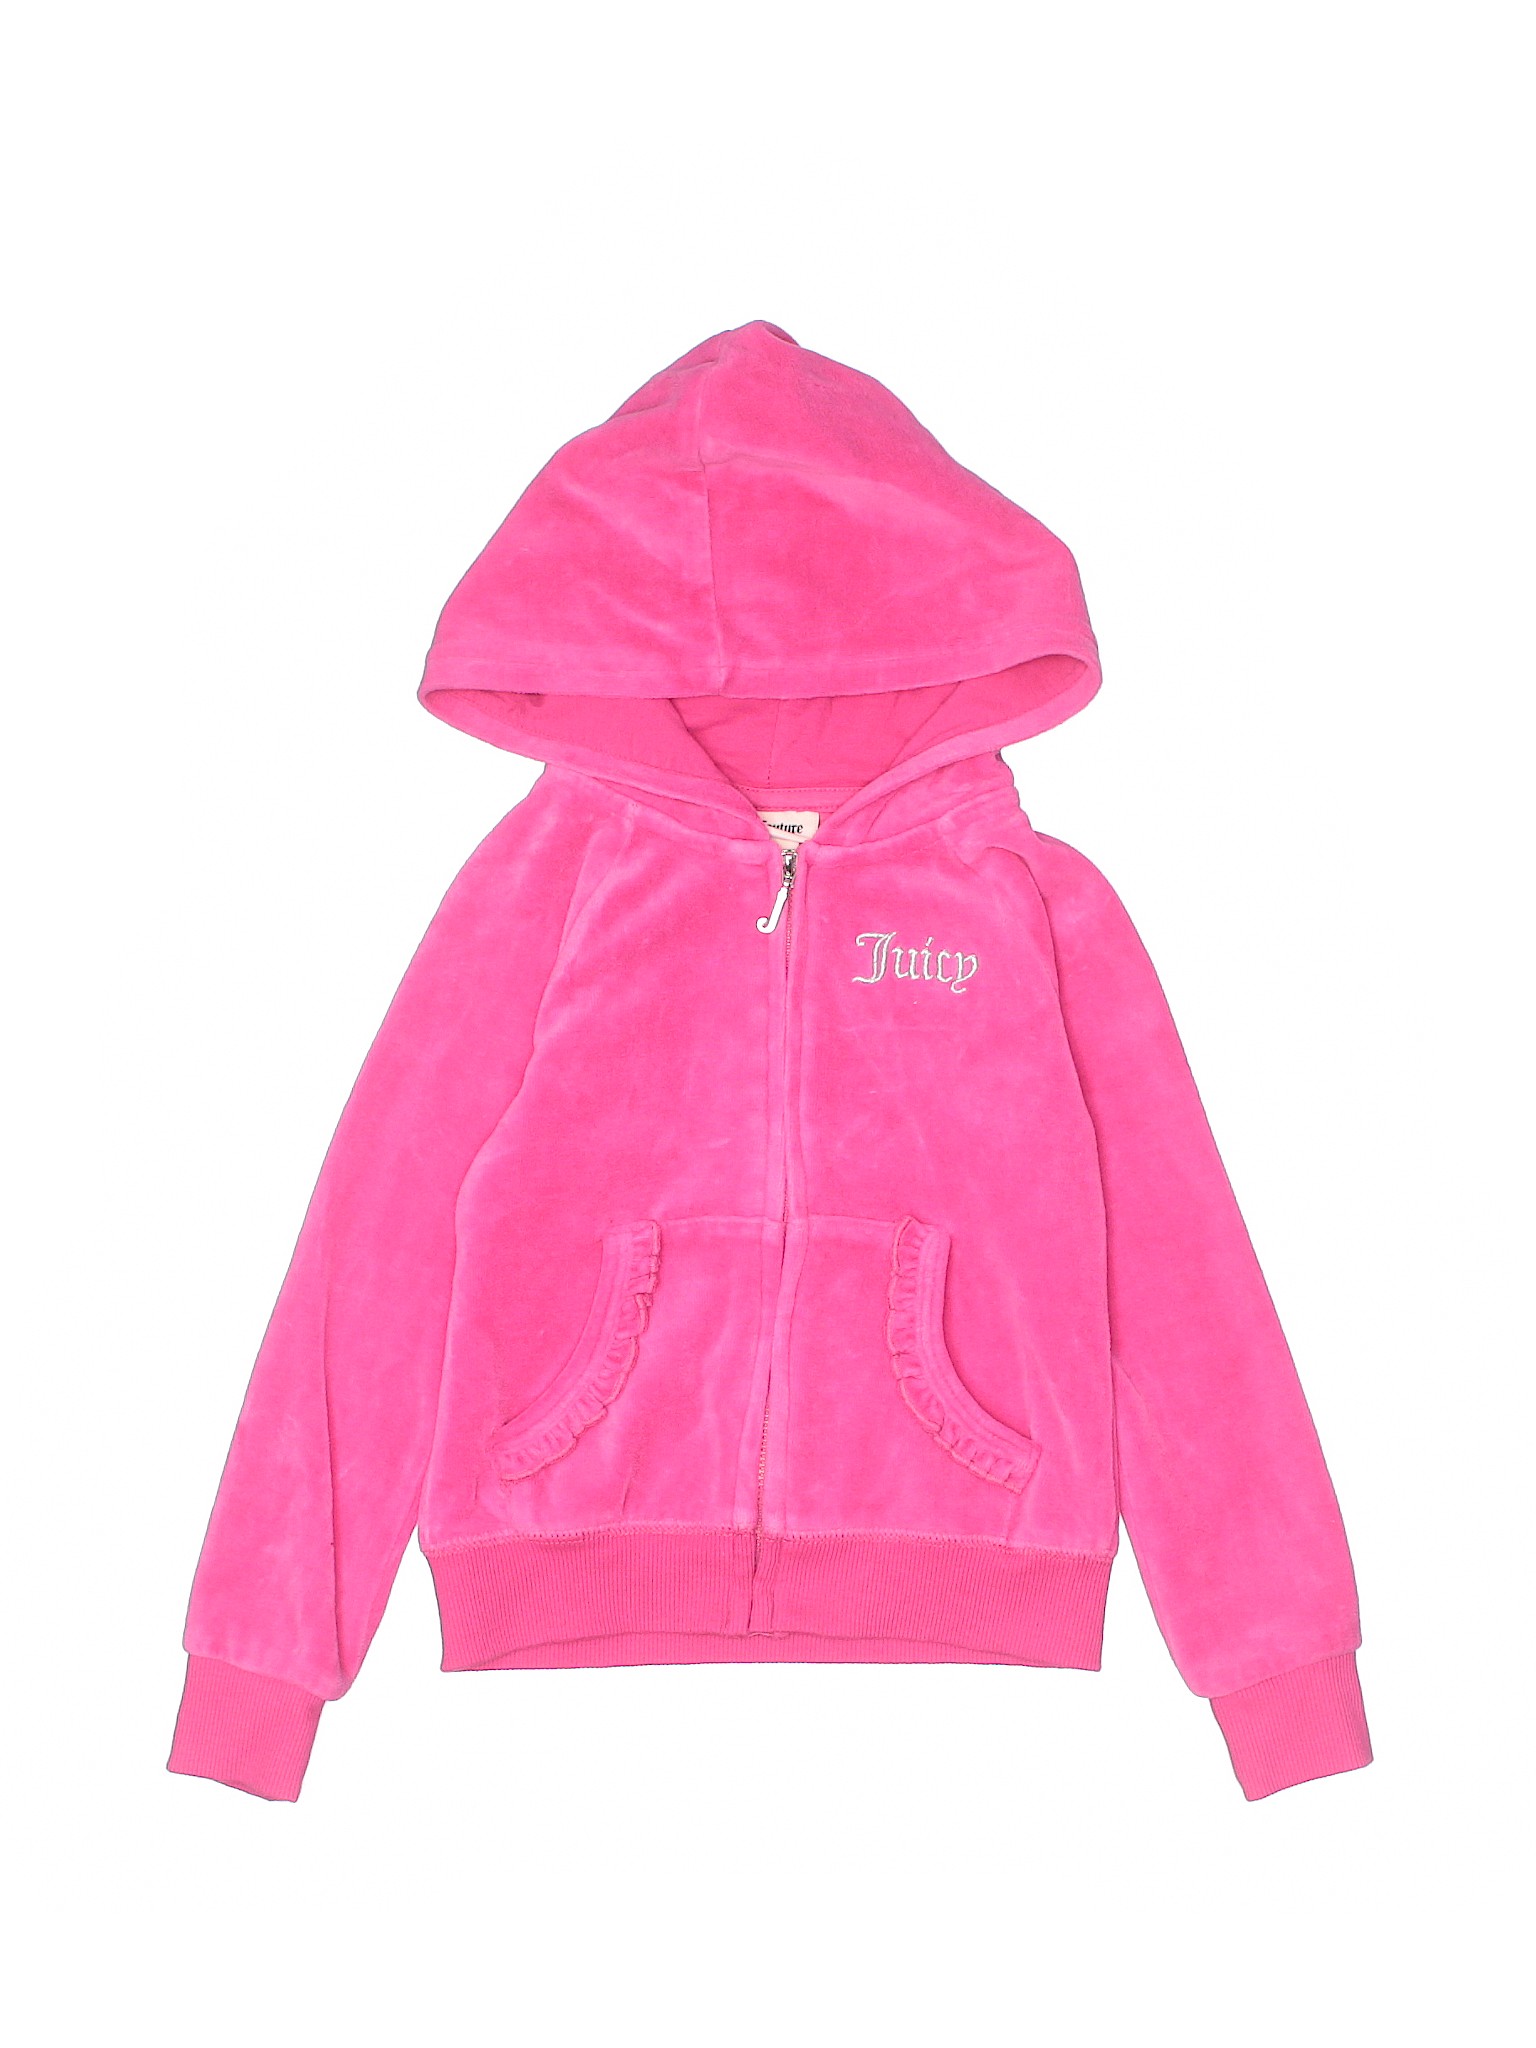 Juicy Couture Girls Pink Zip Up Hoodie 4 | eBay